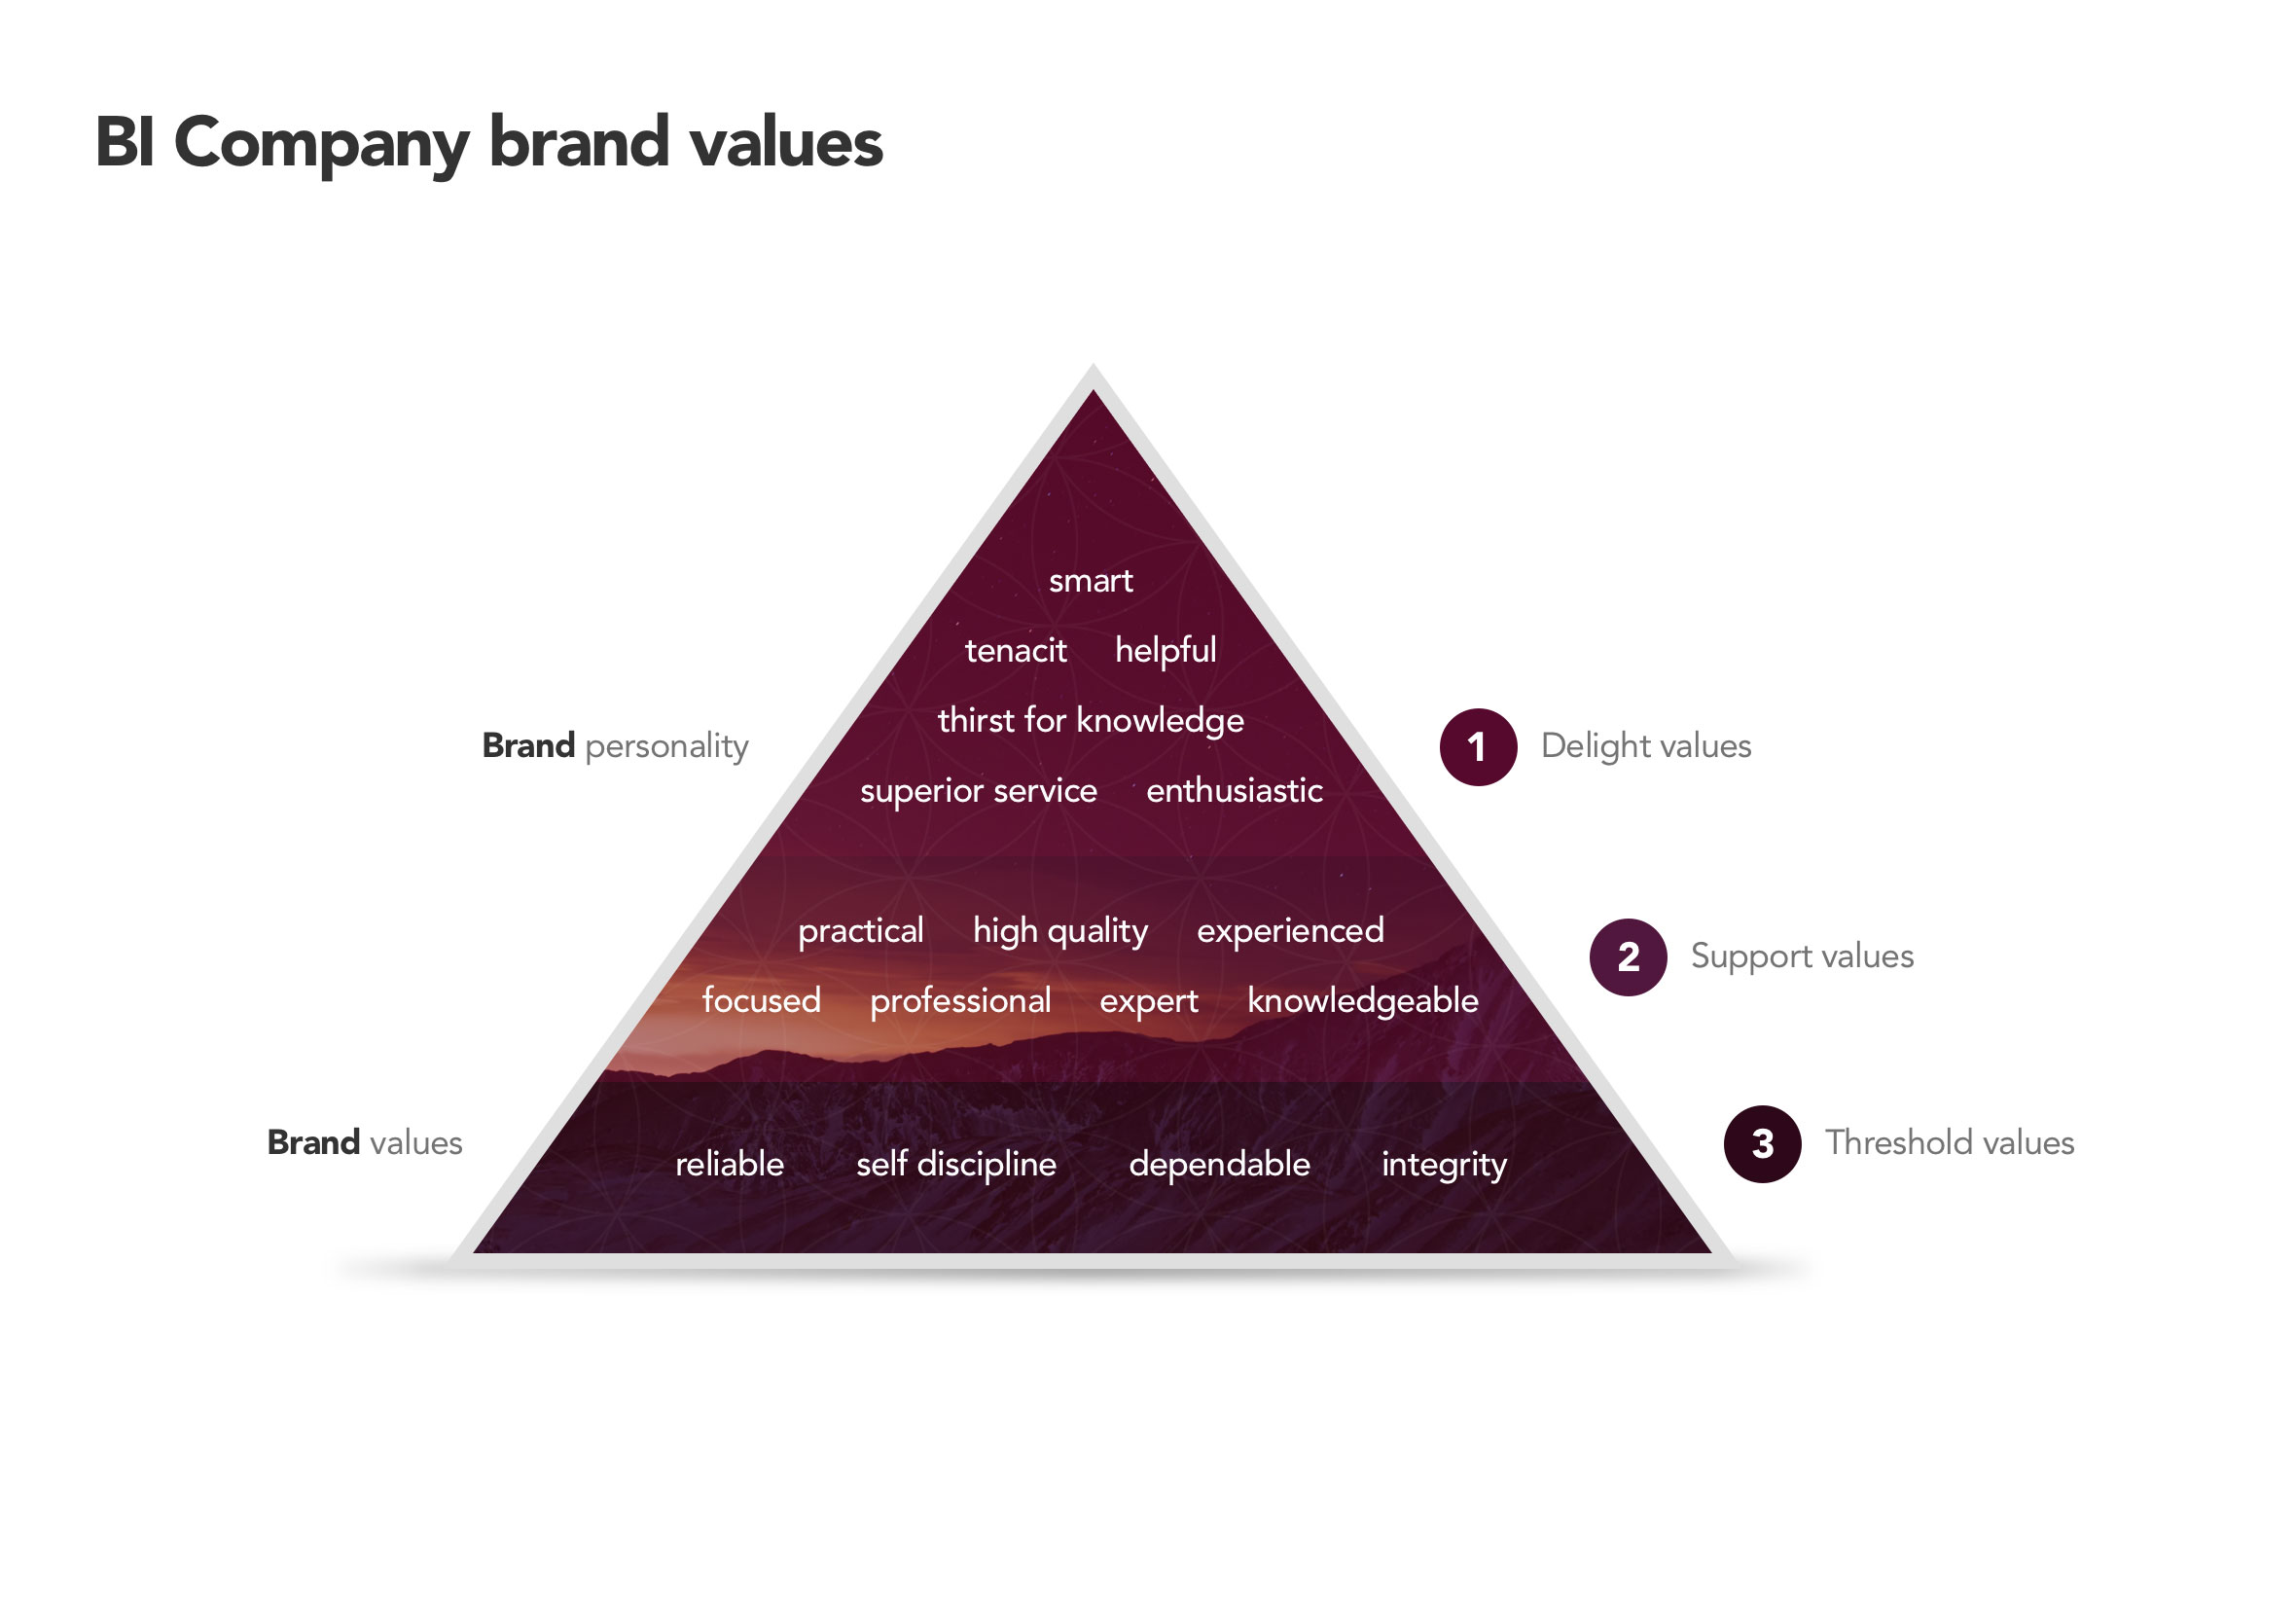 Mero PowerPoint template company brand values